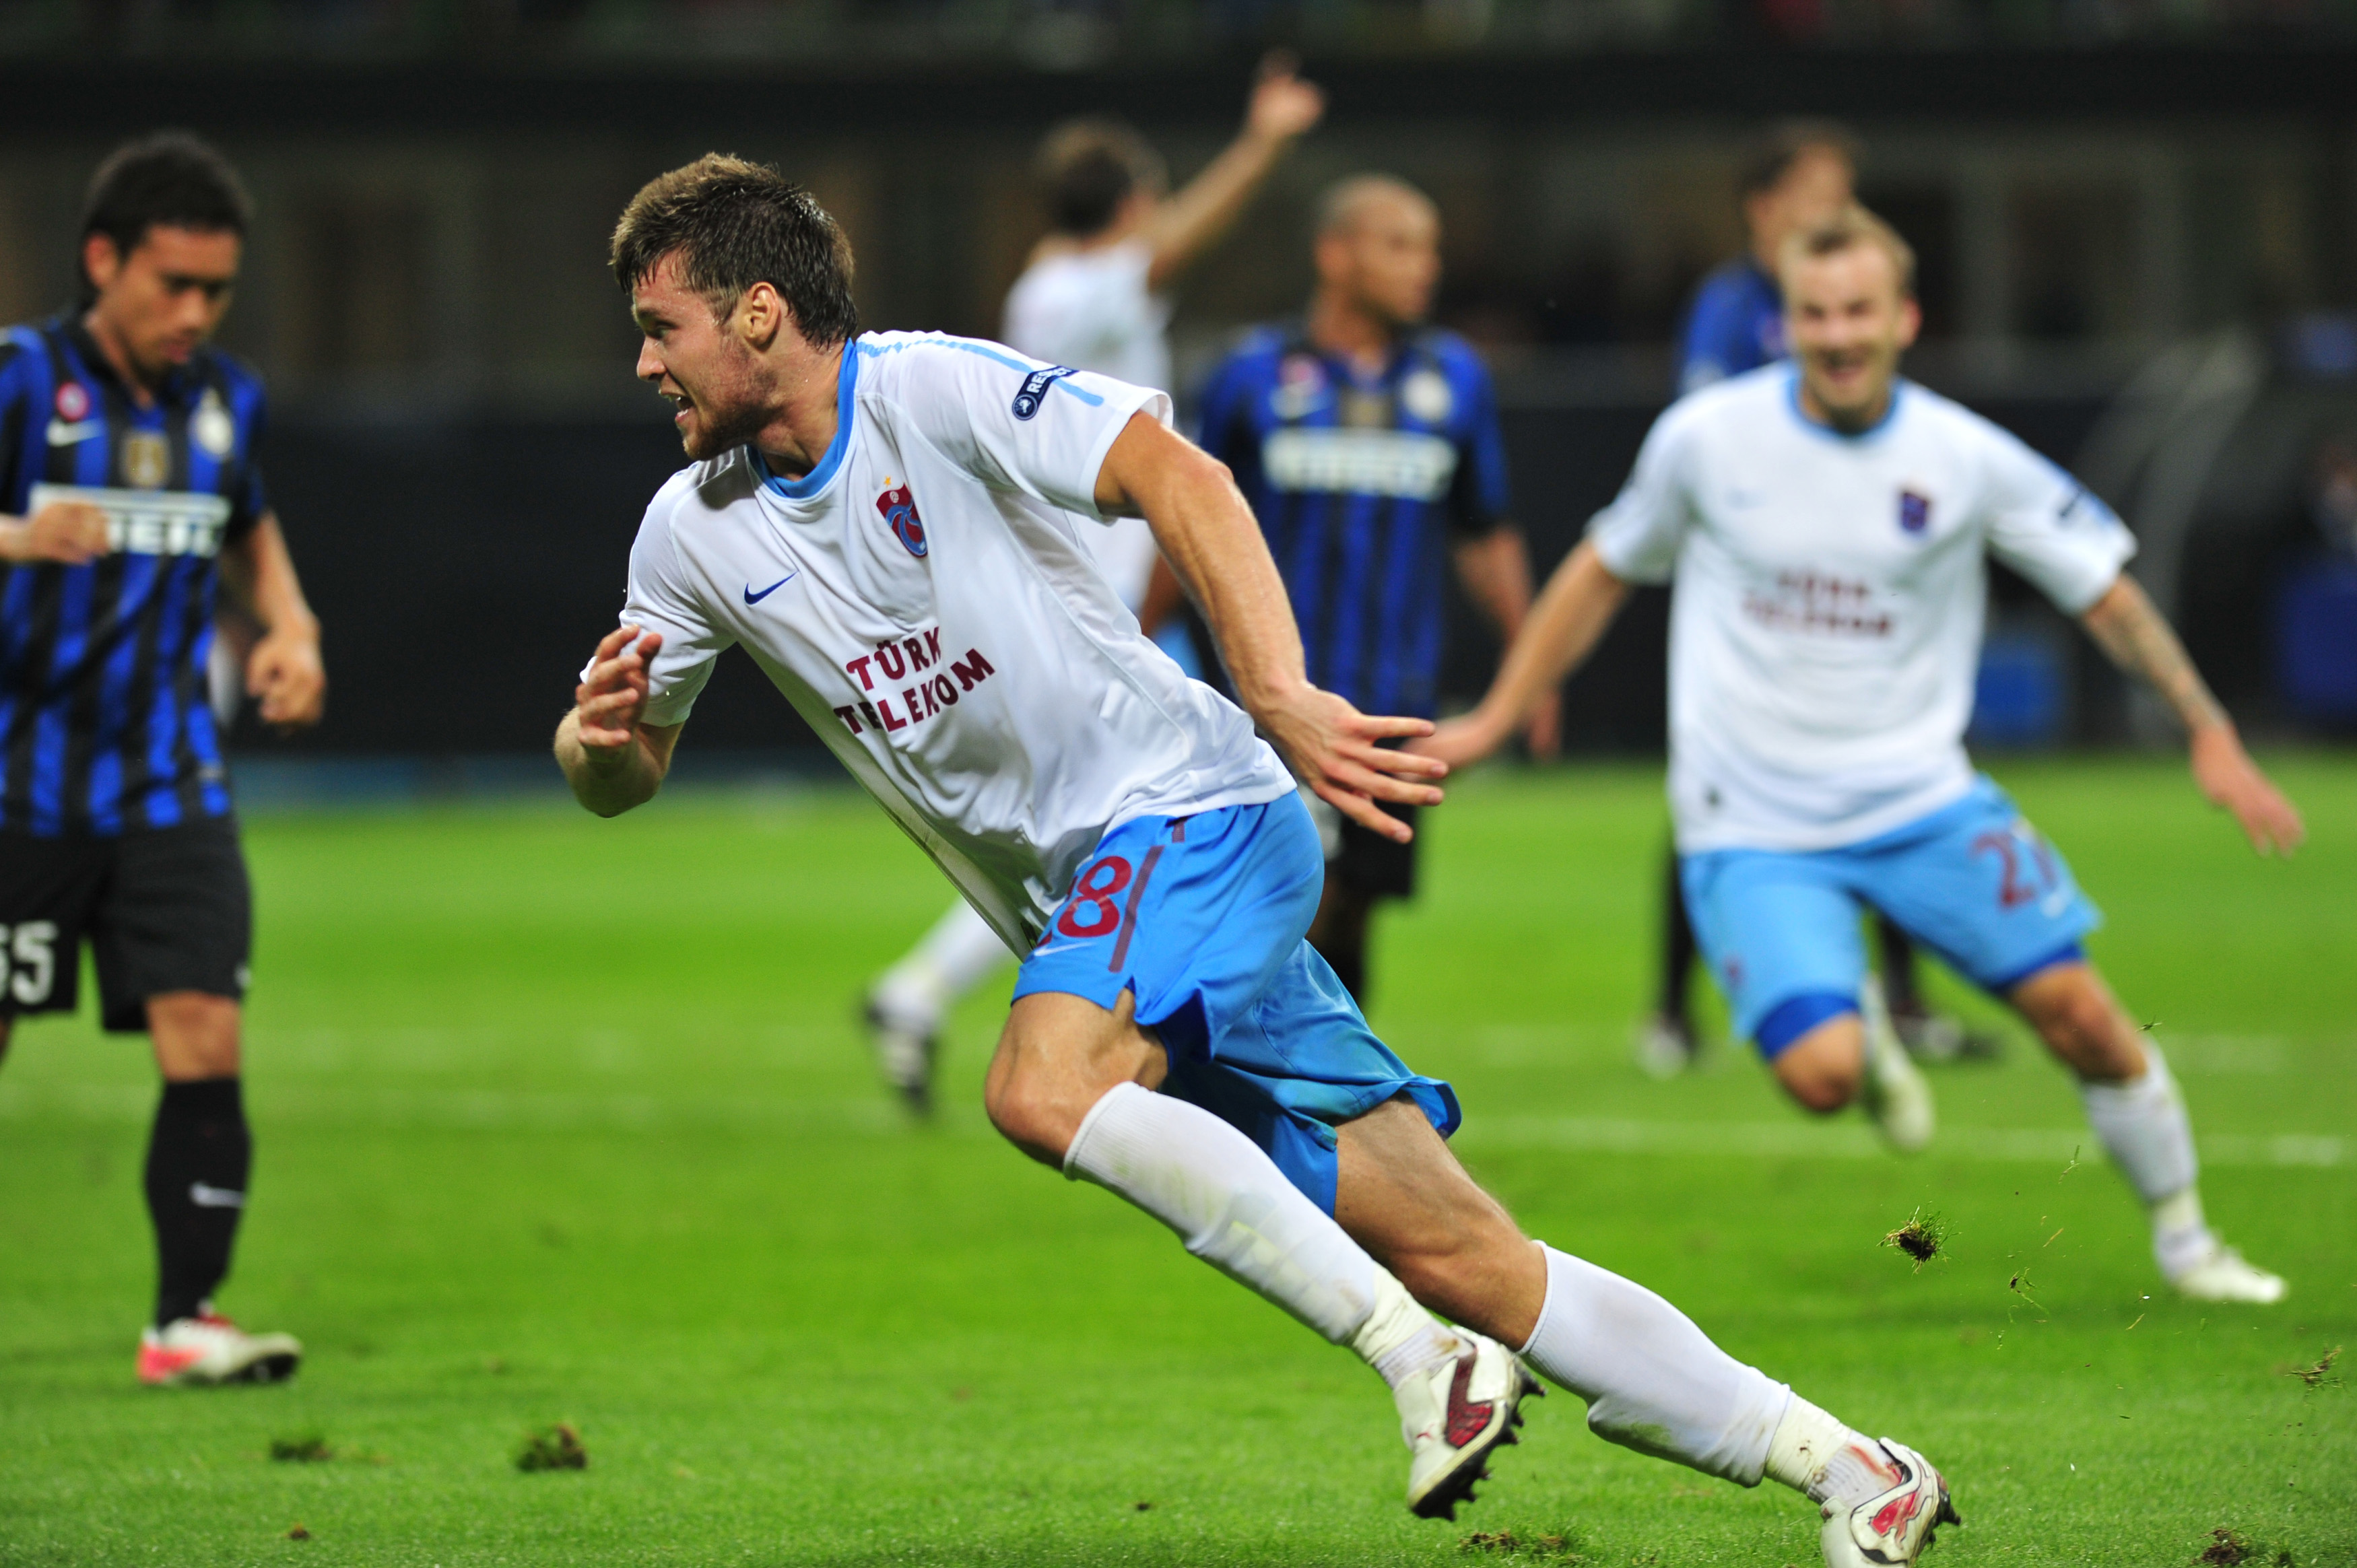 Celustka: “My goal against Inter was a memorable moment”